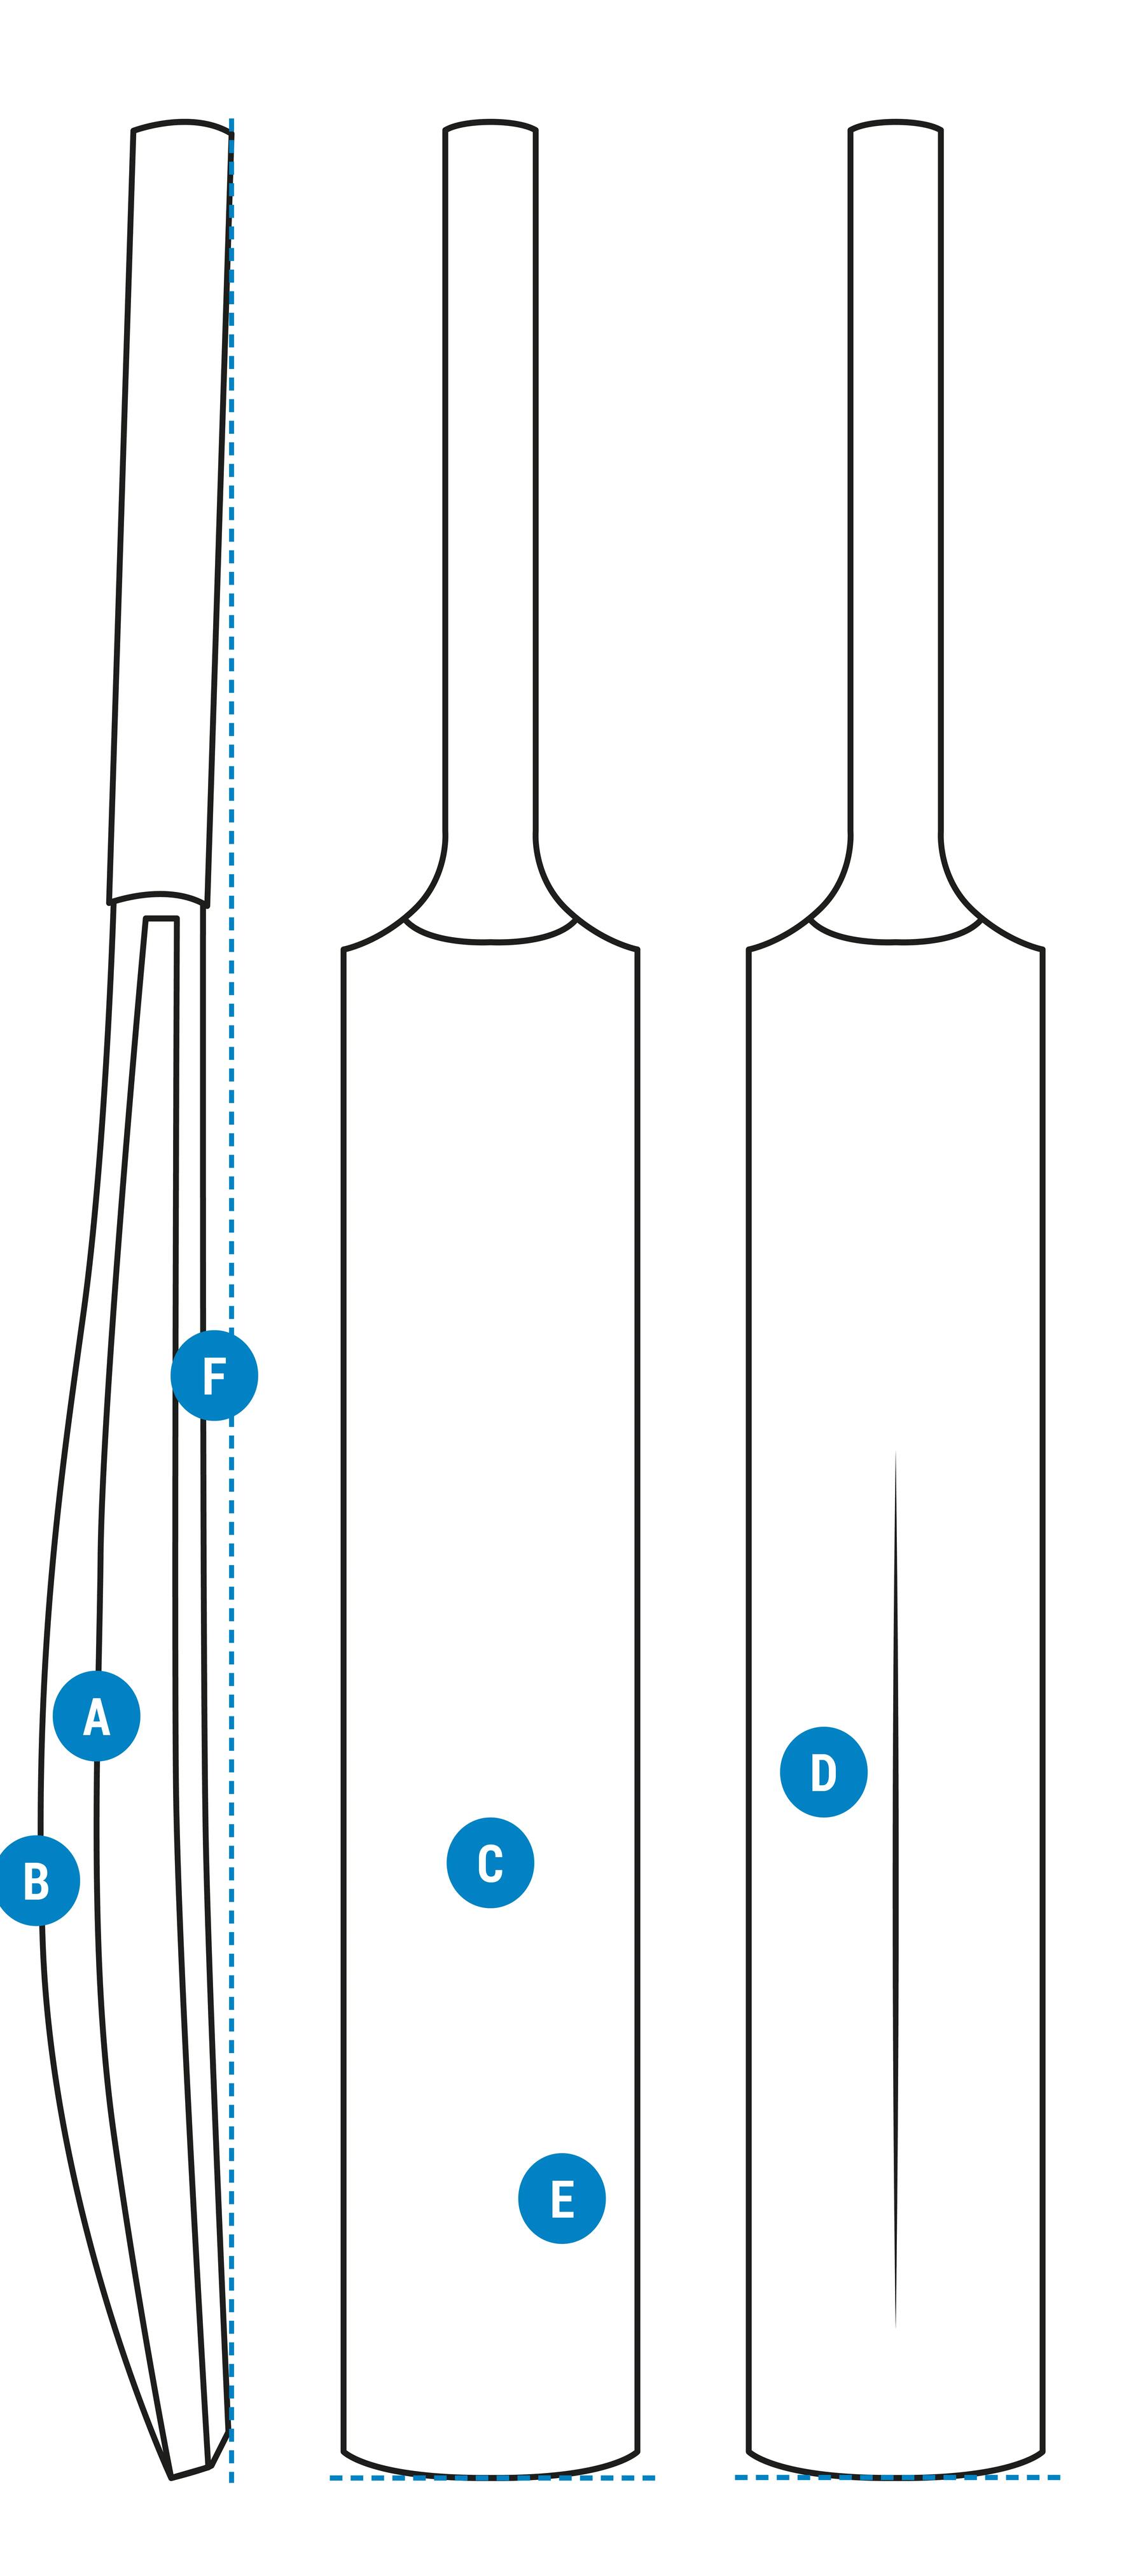 A diagram explaining the anatomy of a cricket bat